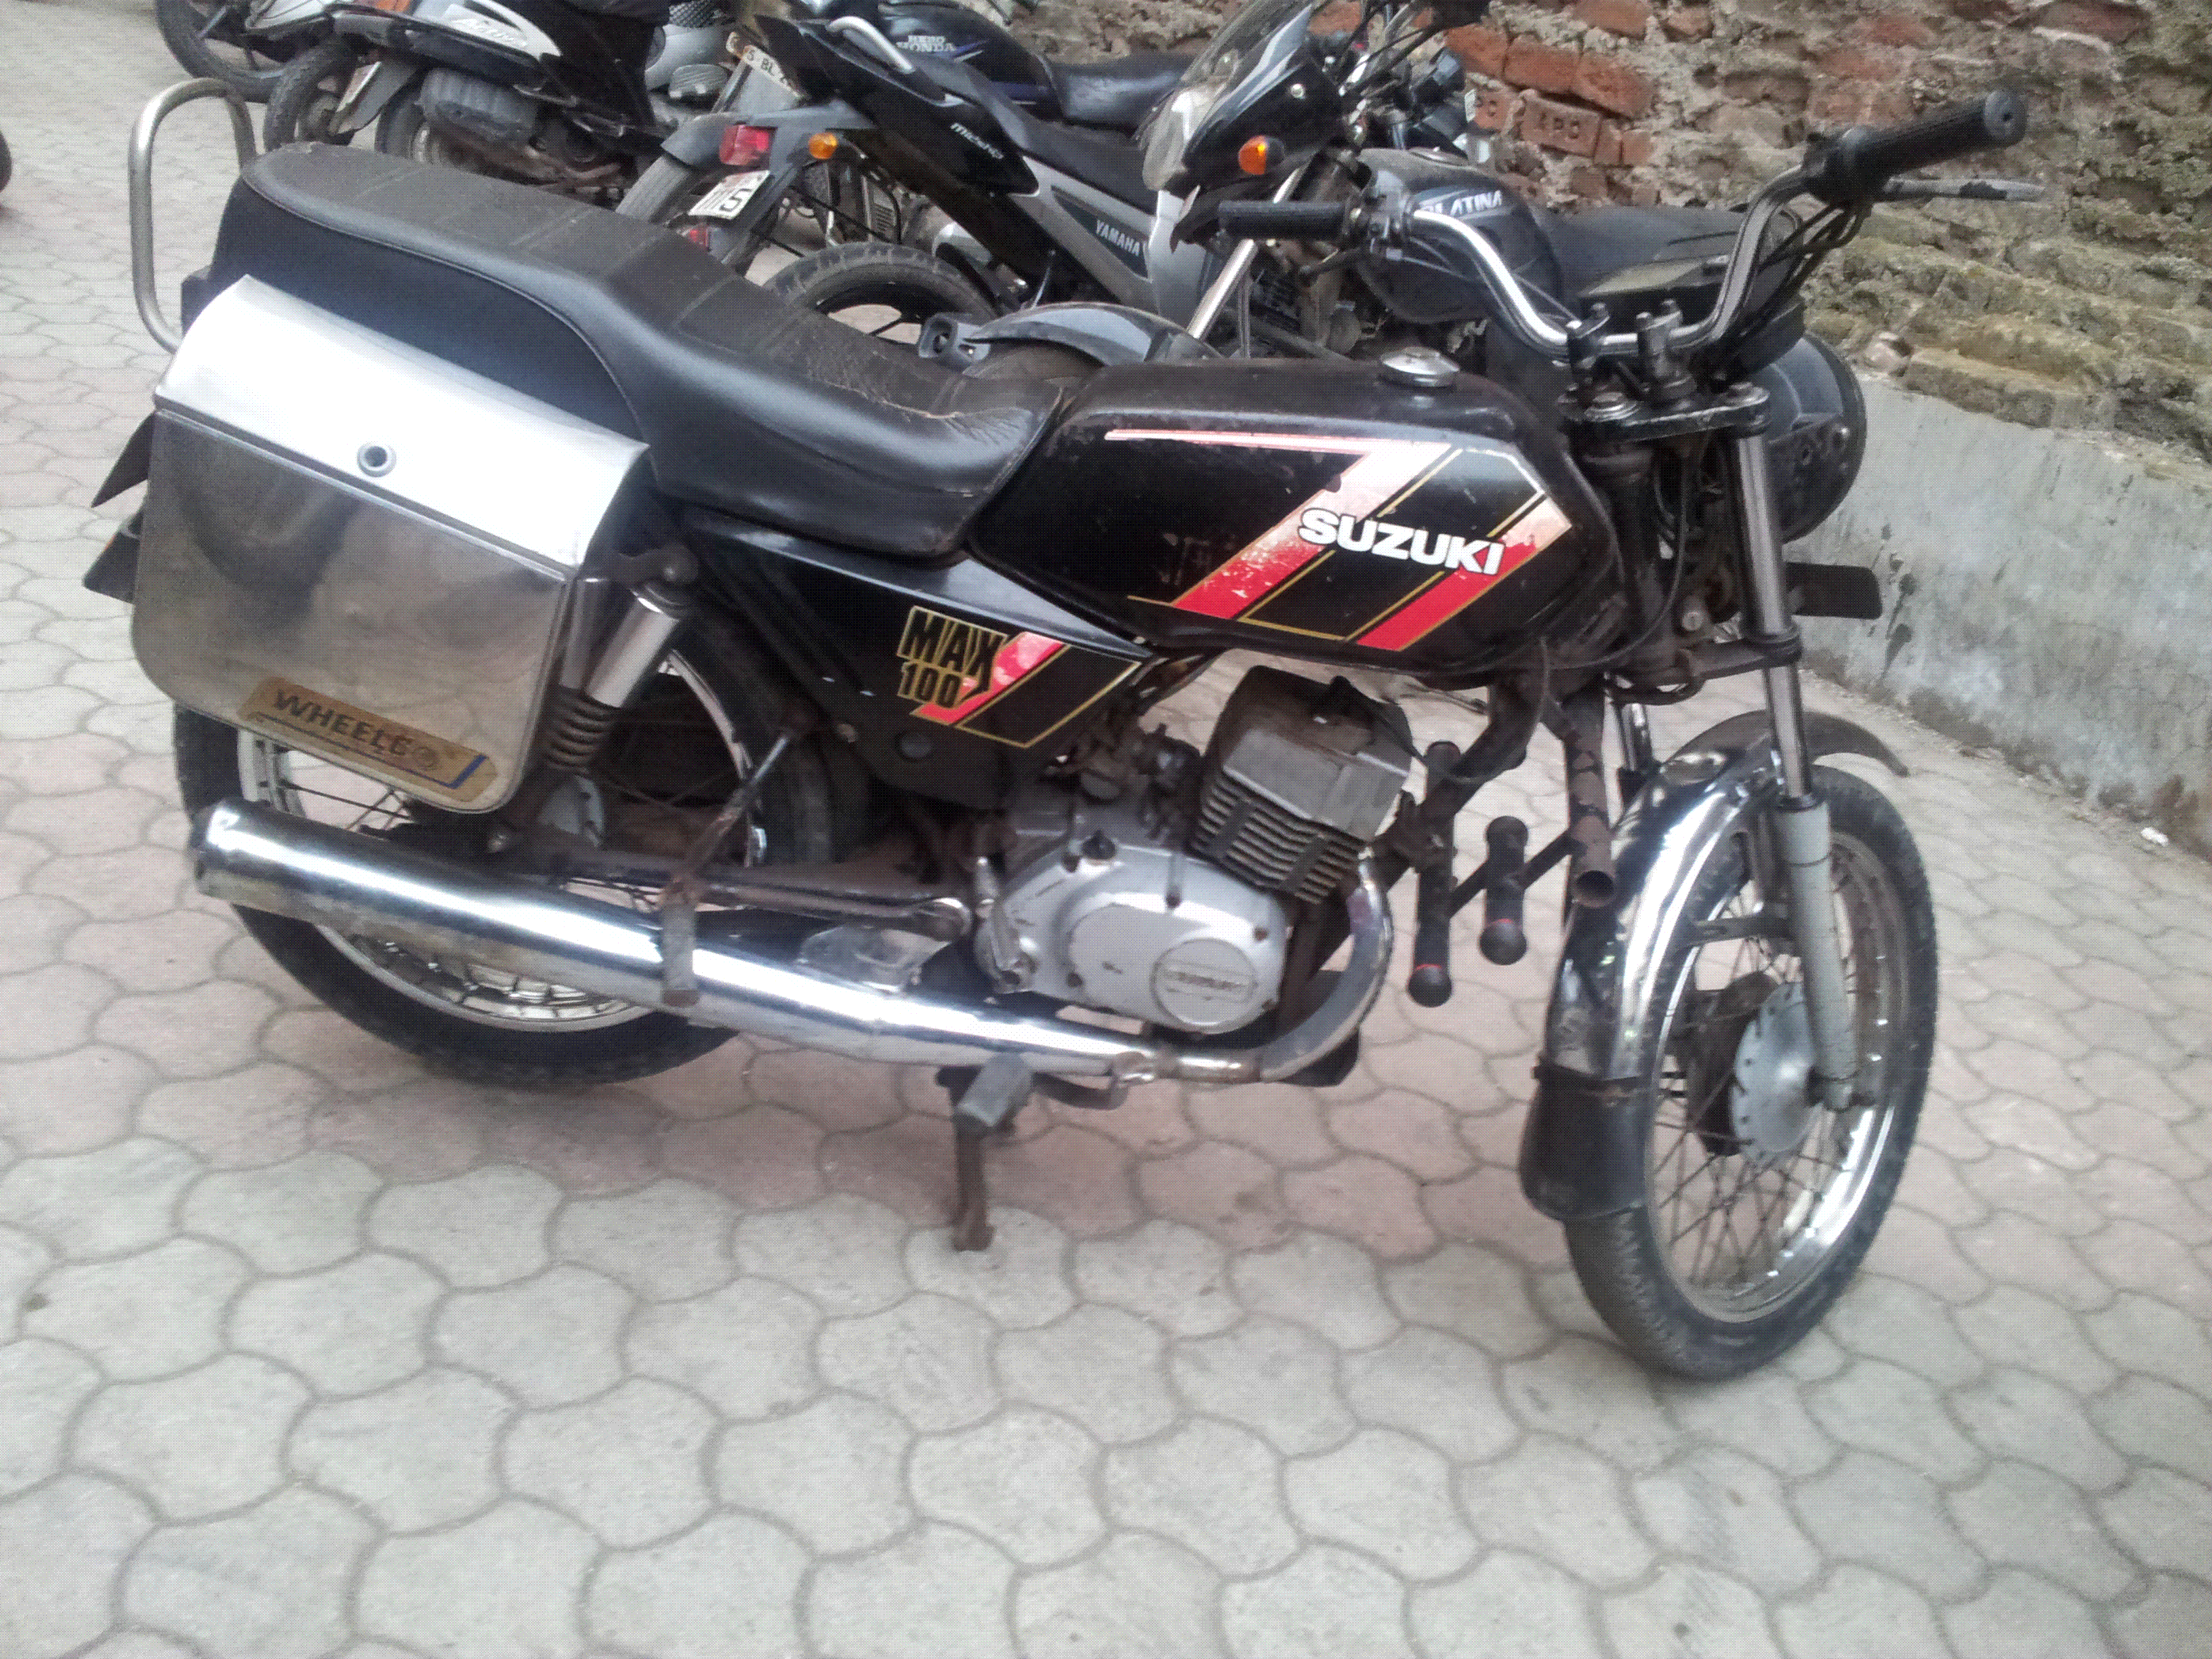 Suzuki MAX 100 Picture 1. Bike ID 92006. Bike located in Surat - Bikes4Sale